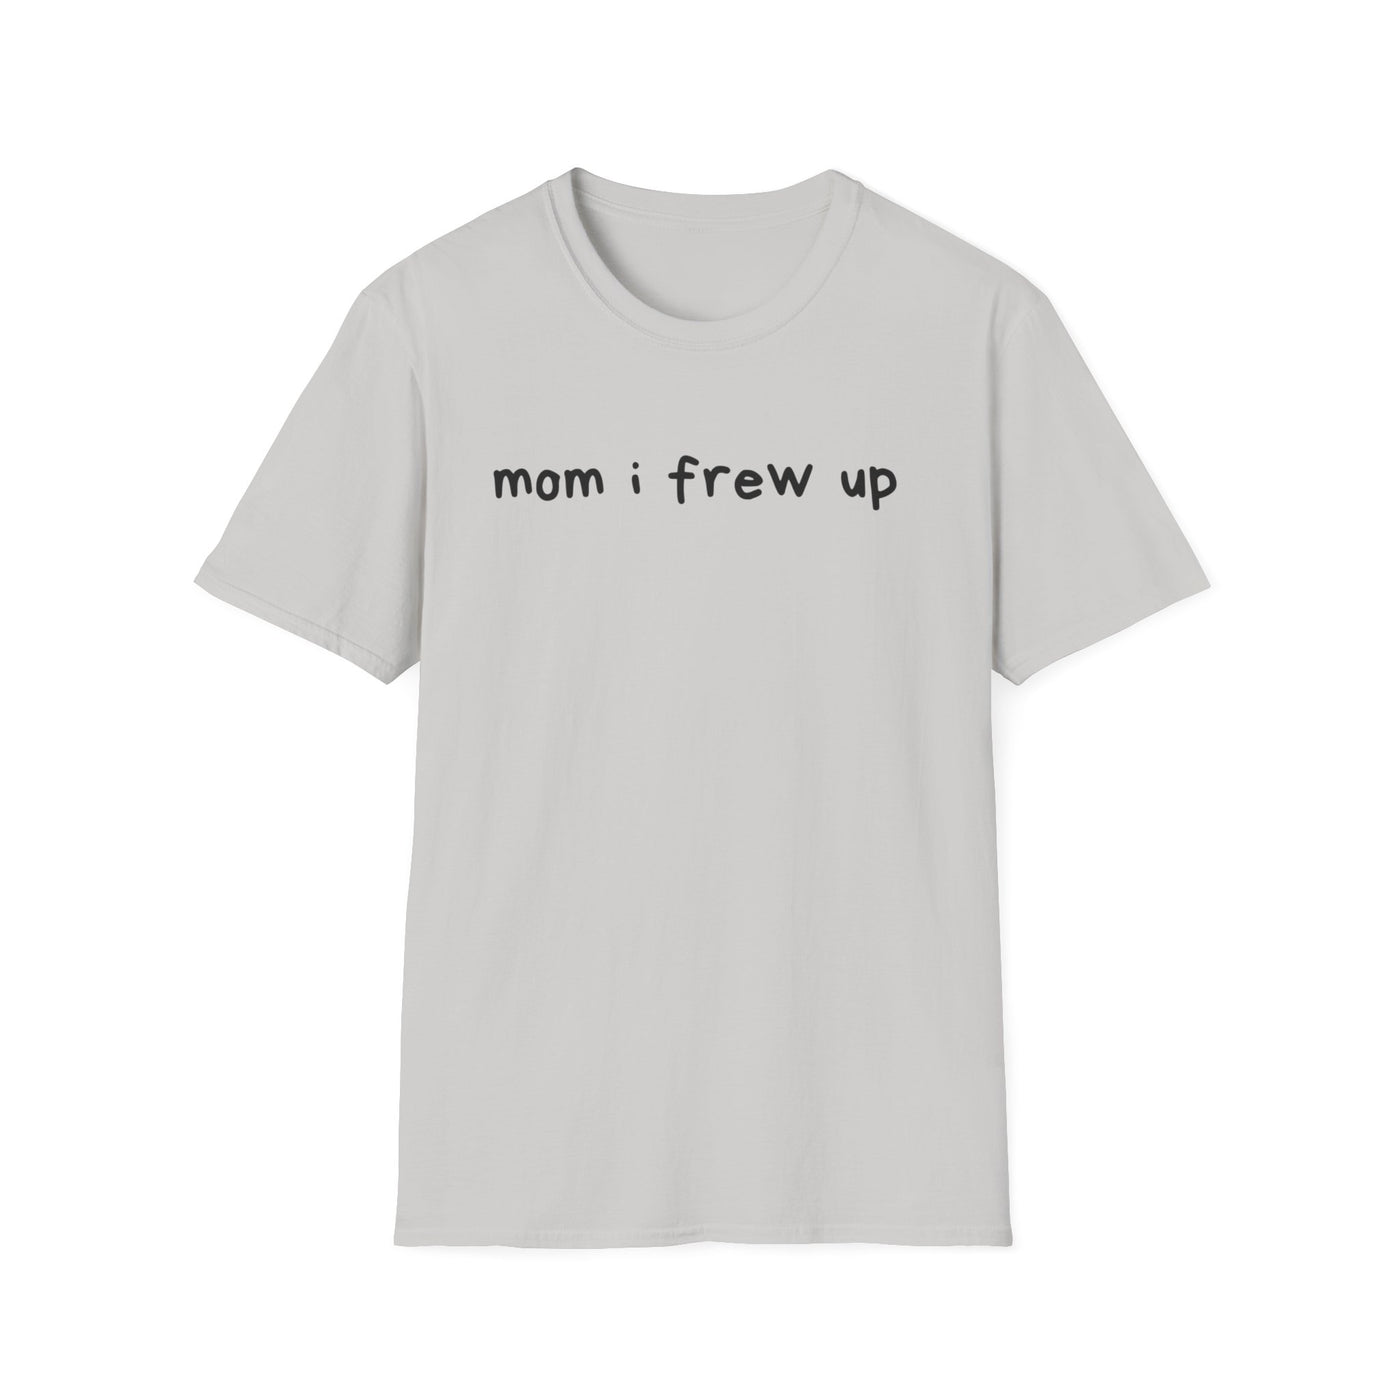 Mom I Frew Up